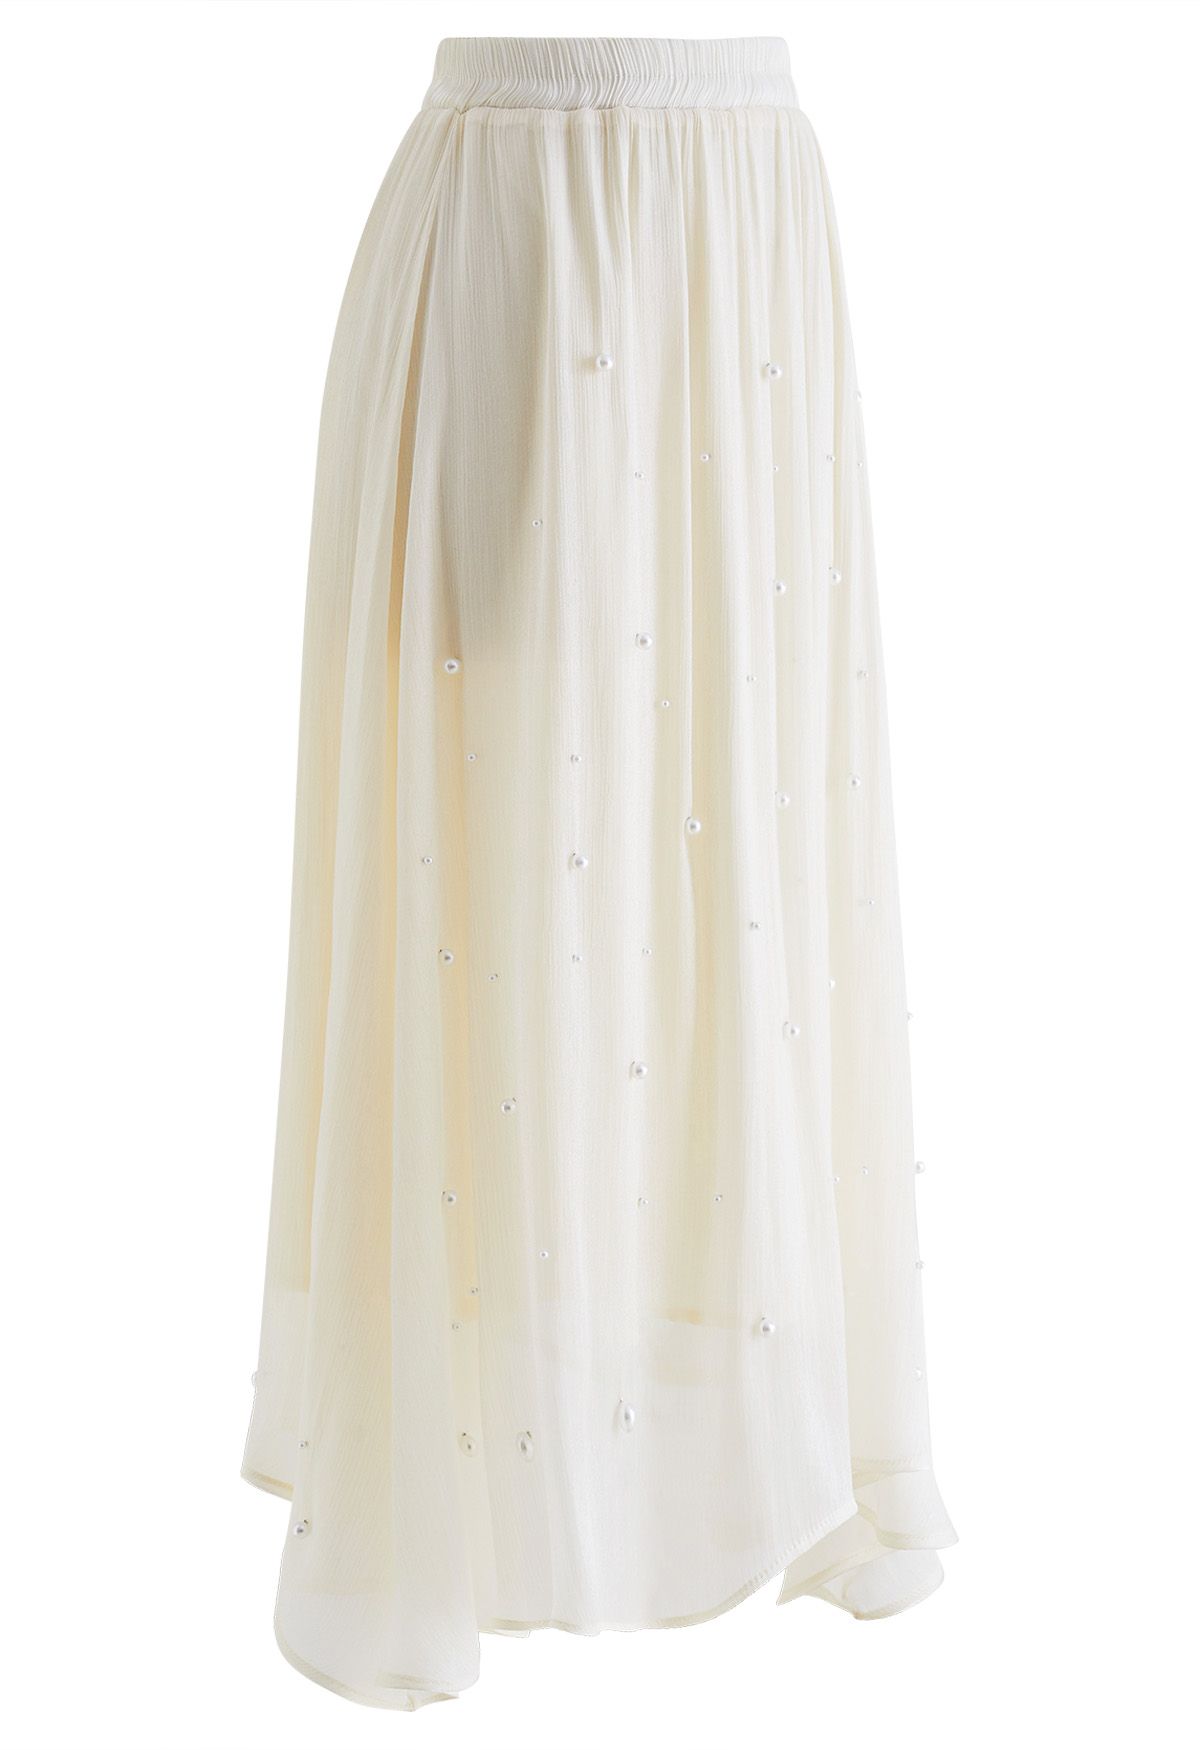 Irregular Pearl Shimmer Chiffon Skirt in Cream